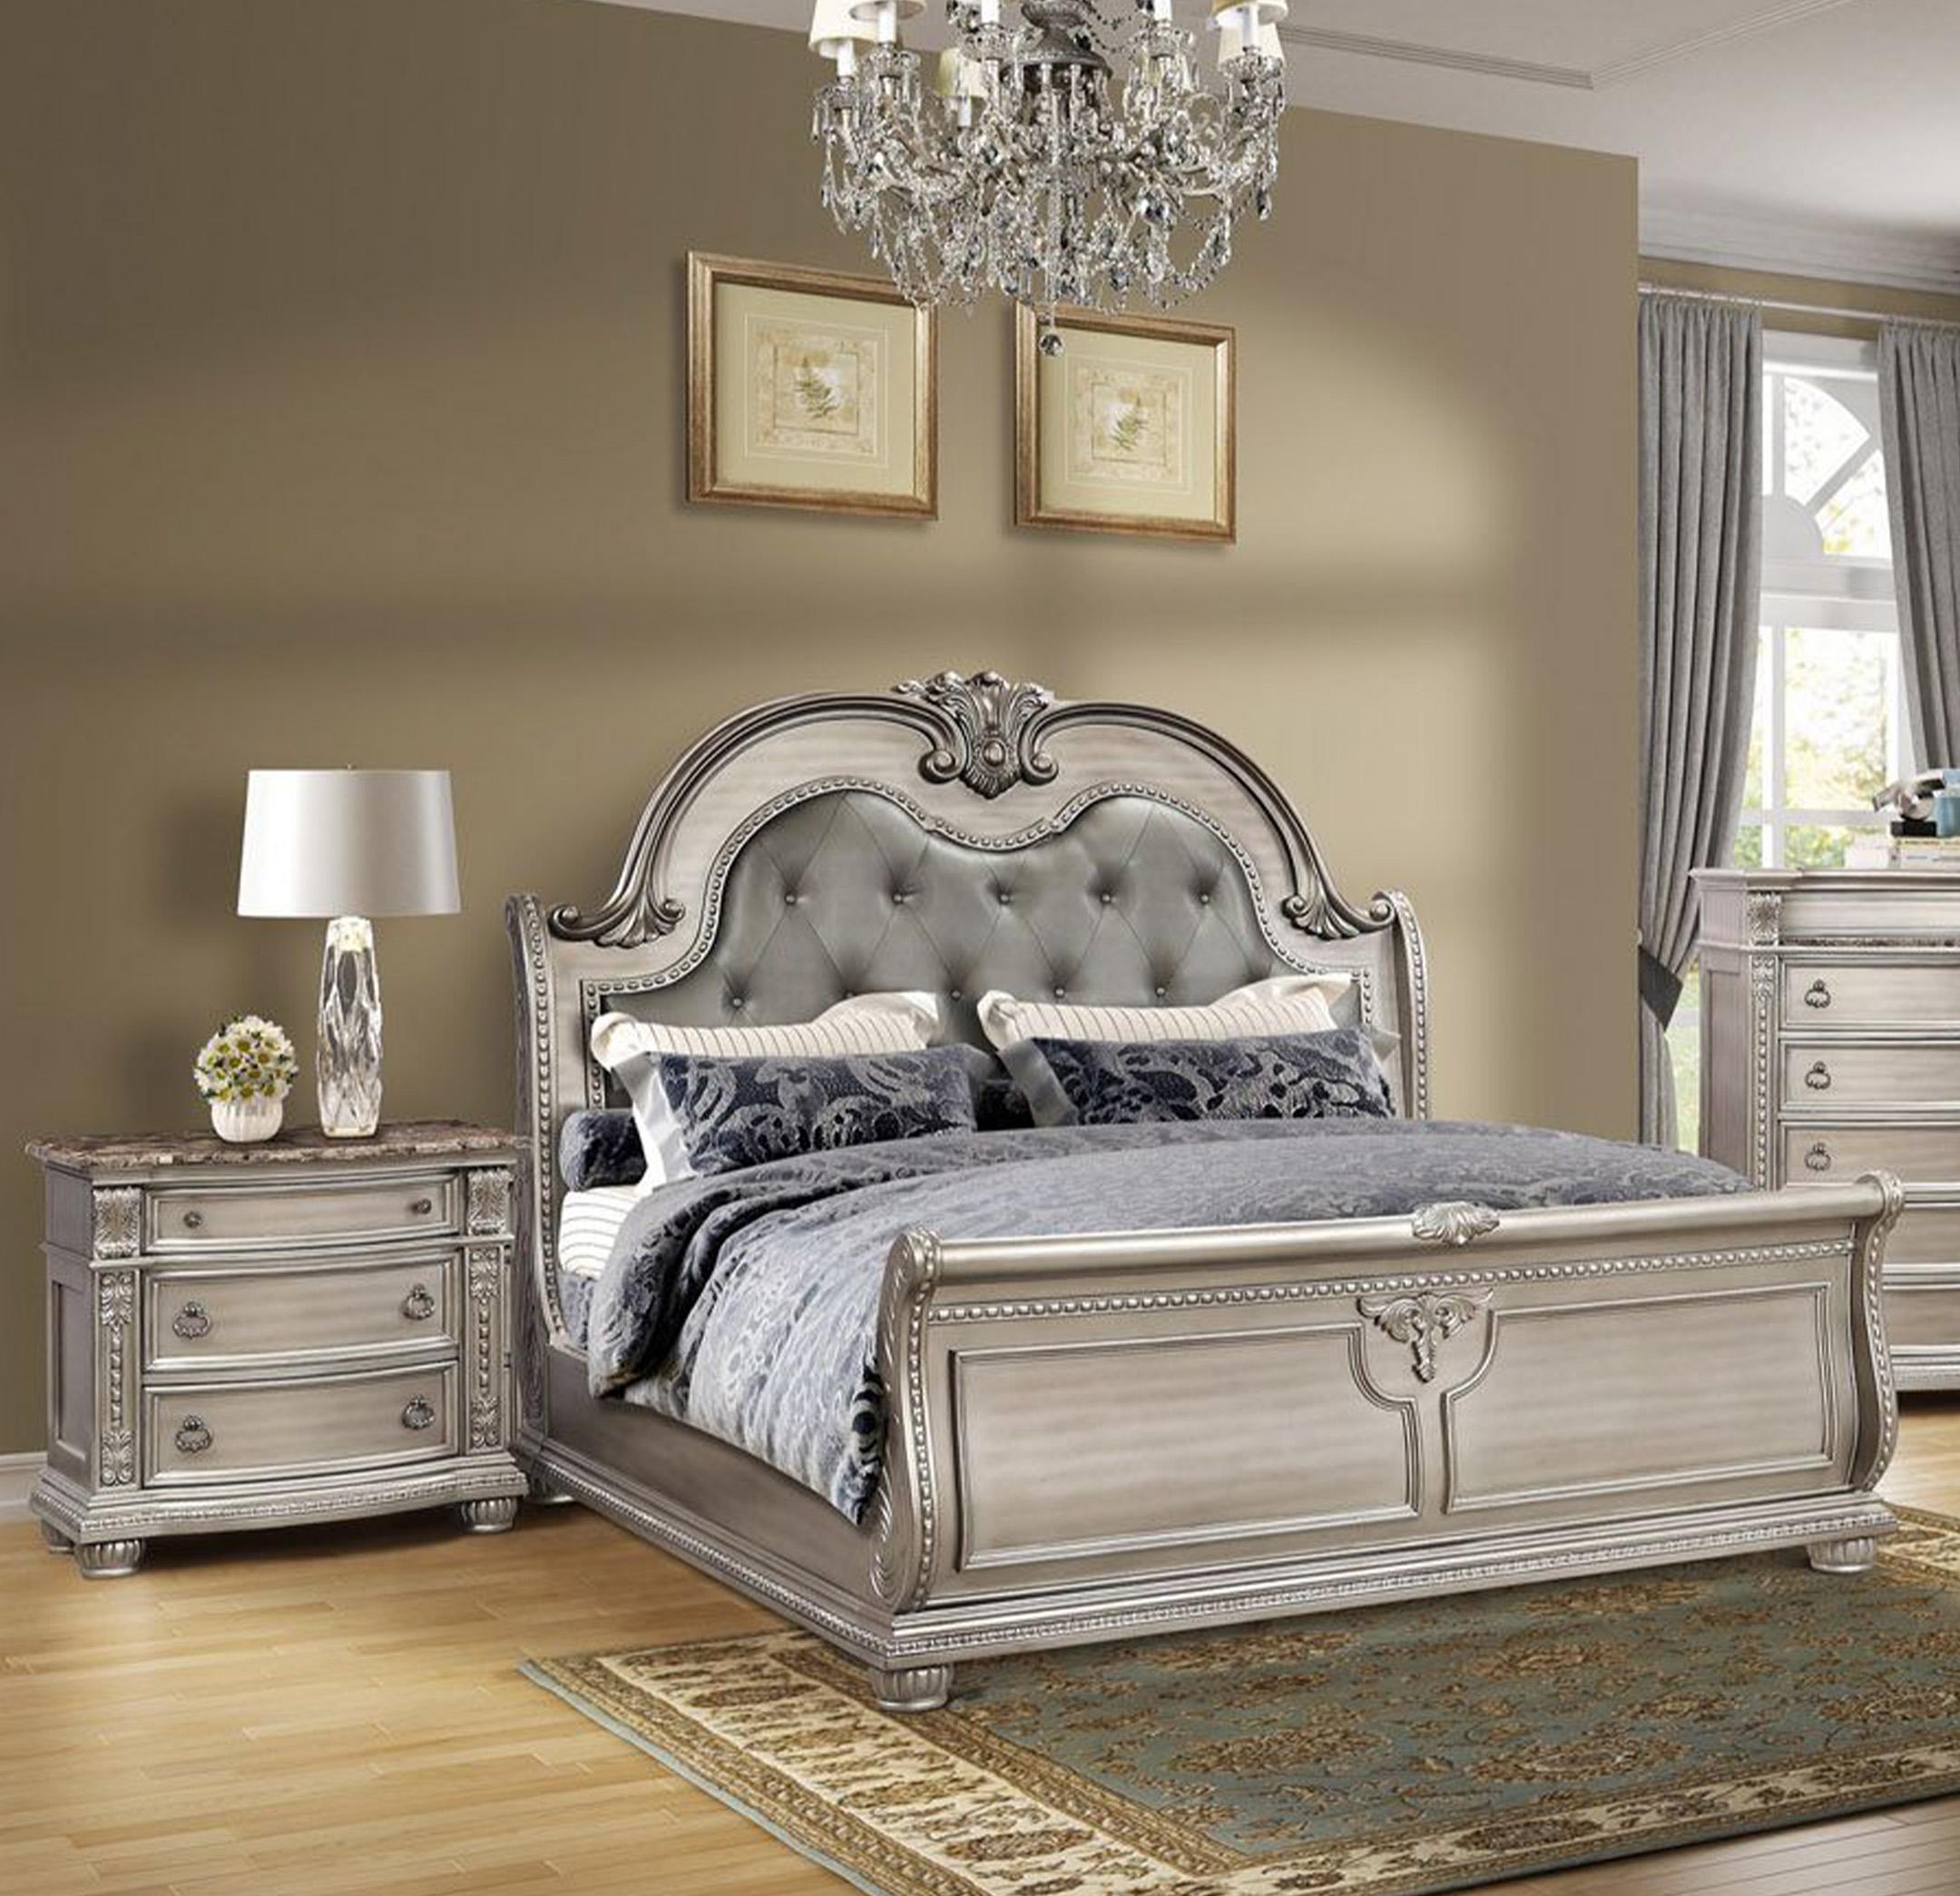 McFerran Furniture B9506 Sleigh Bedroom Set